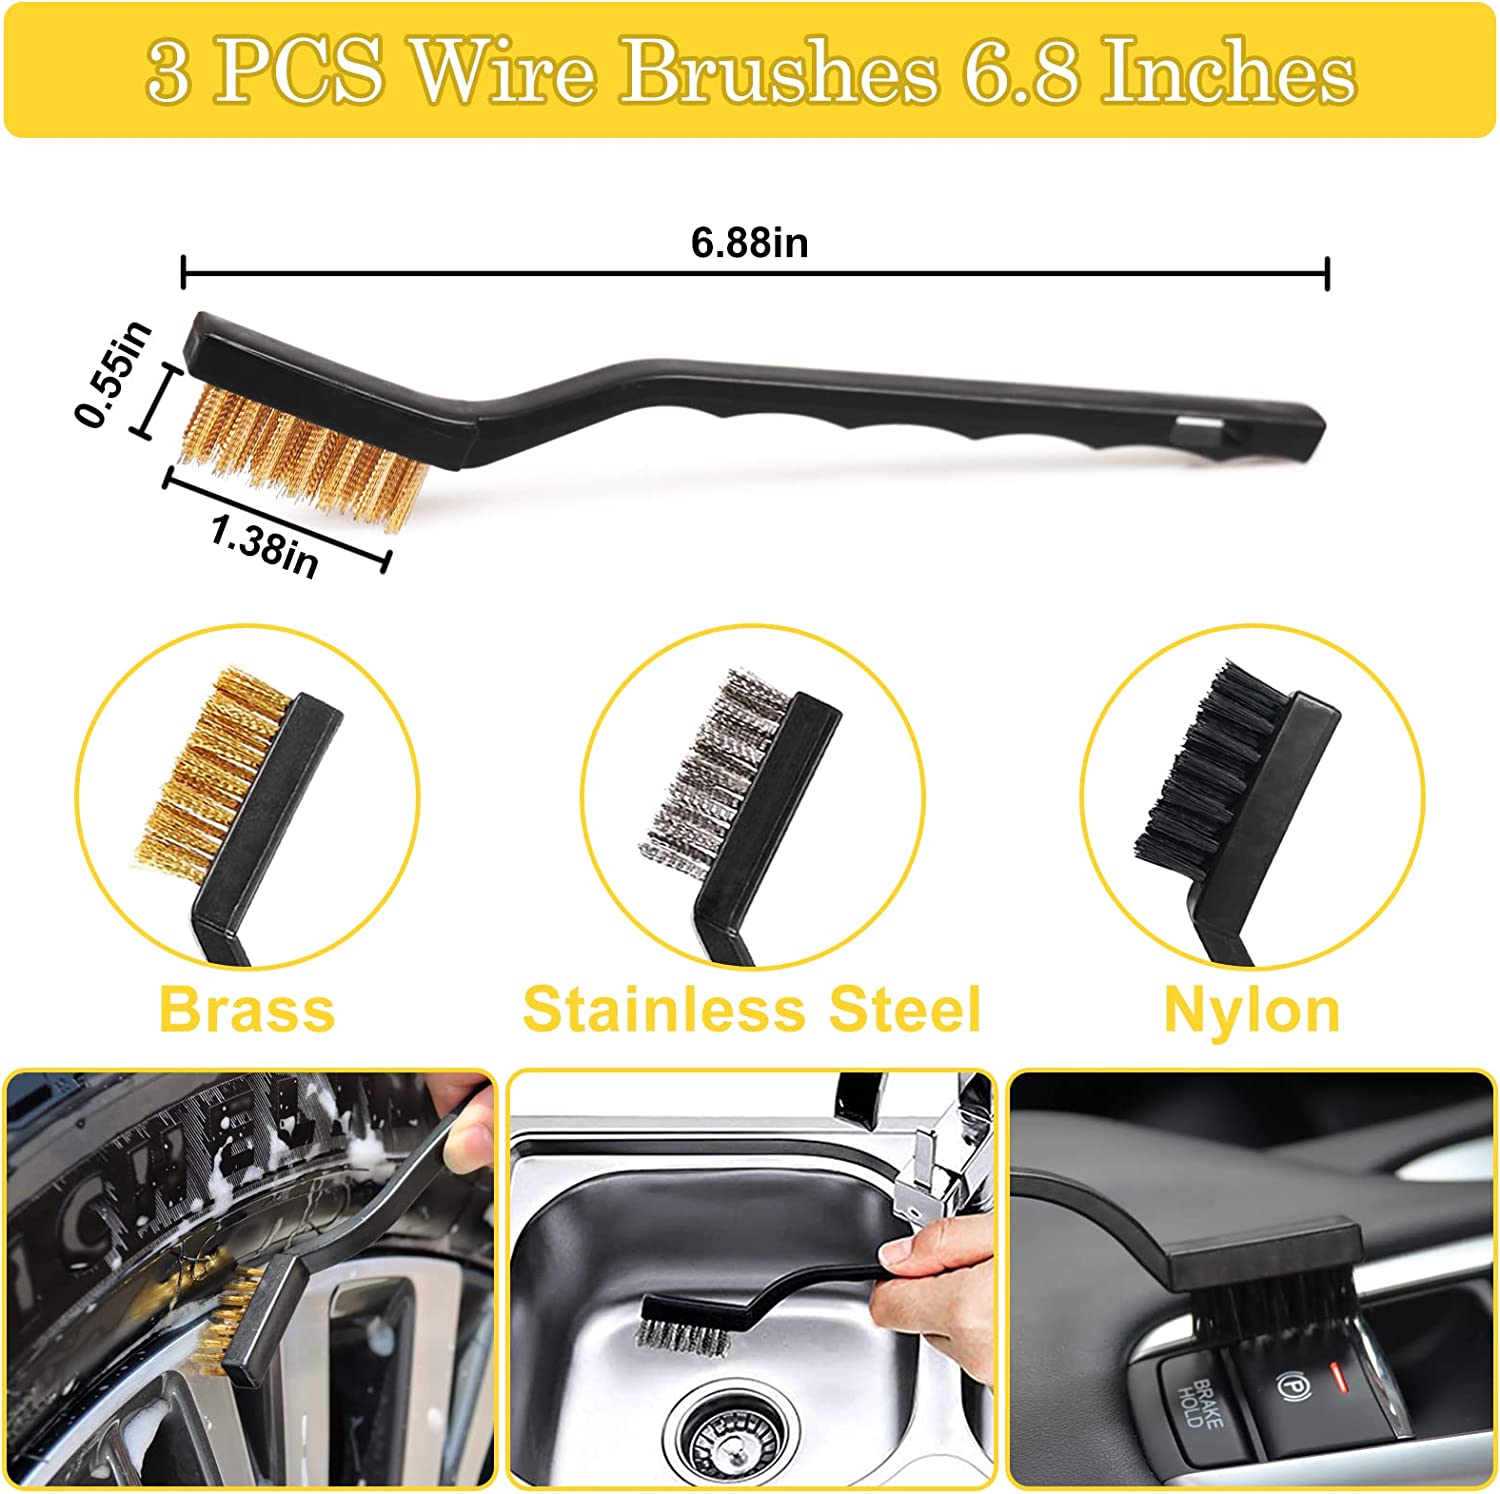 23pcs Exterior Interior Car Wash Cleaning Tools Kit Tire Towels Drill Brush Window Scraper Set with Box